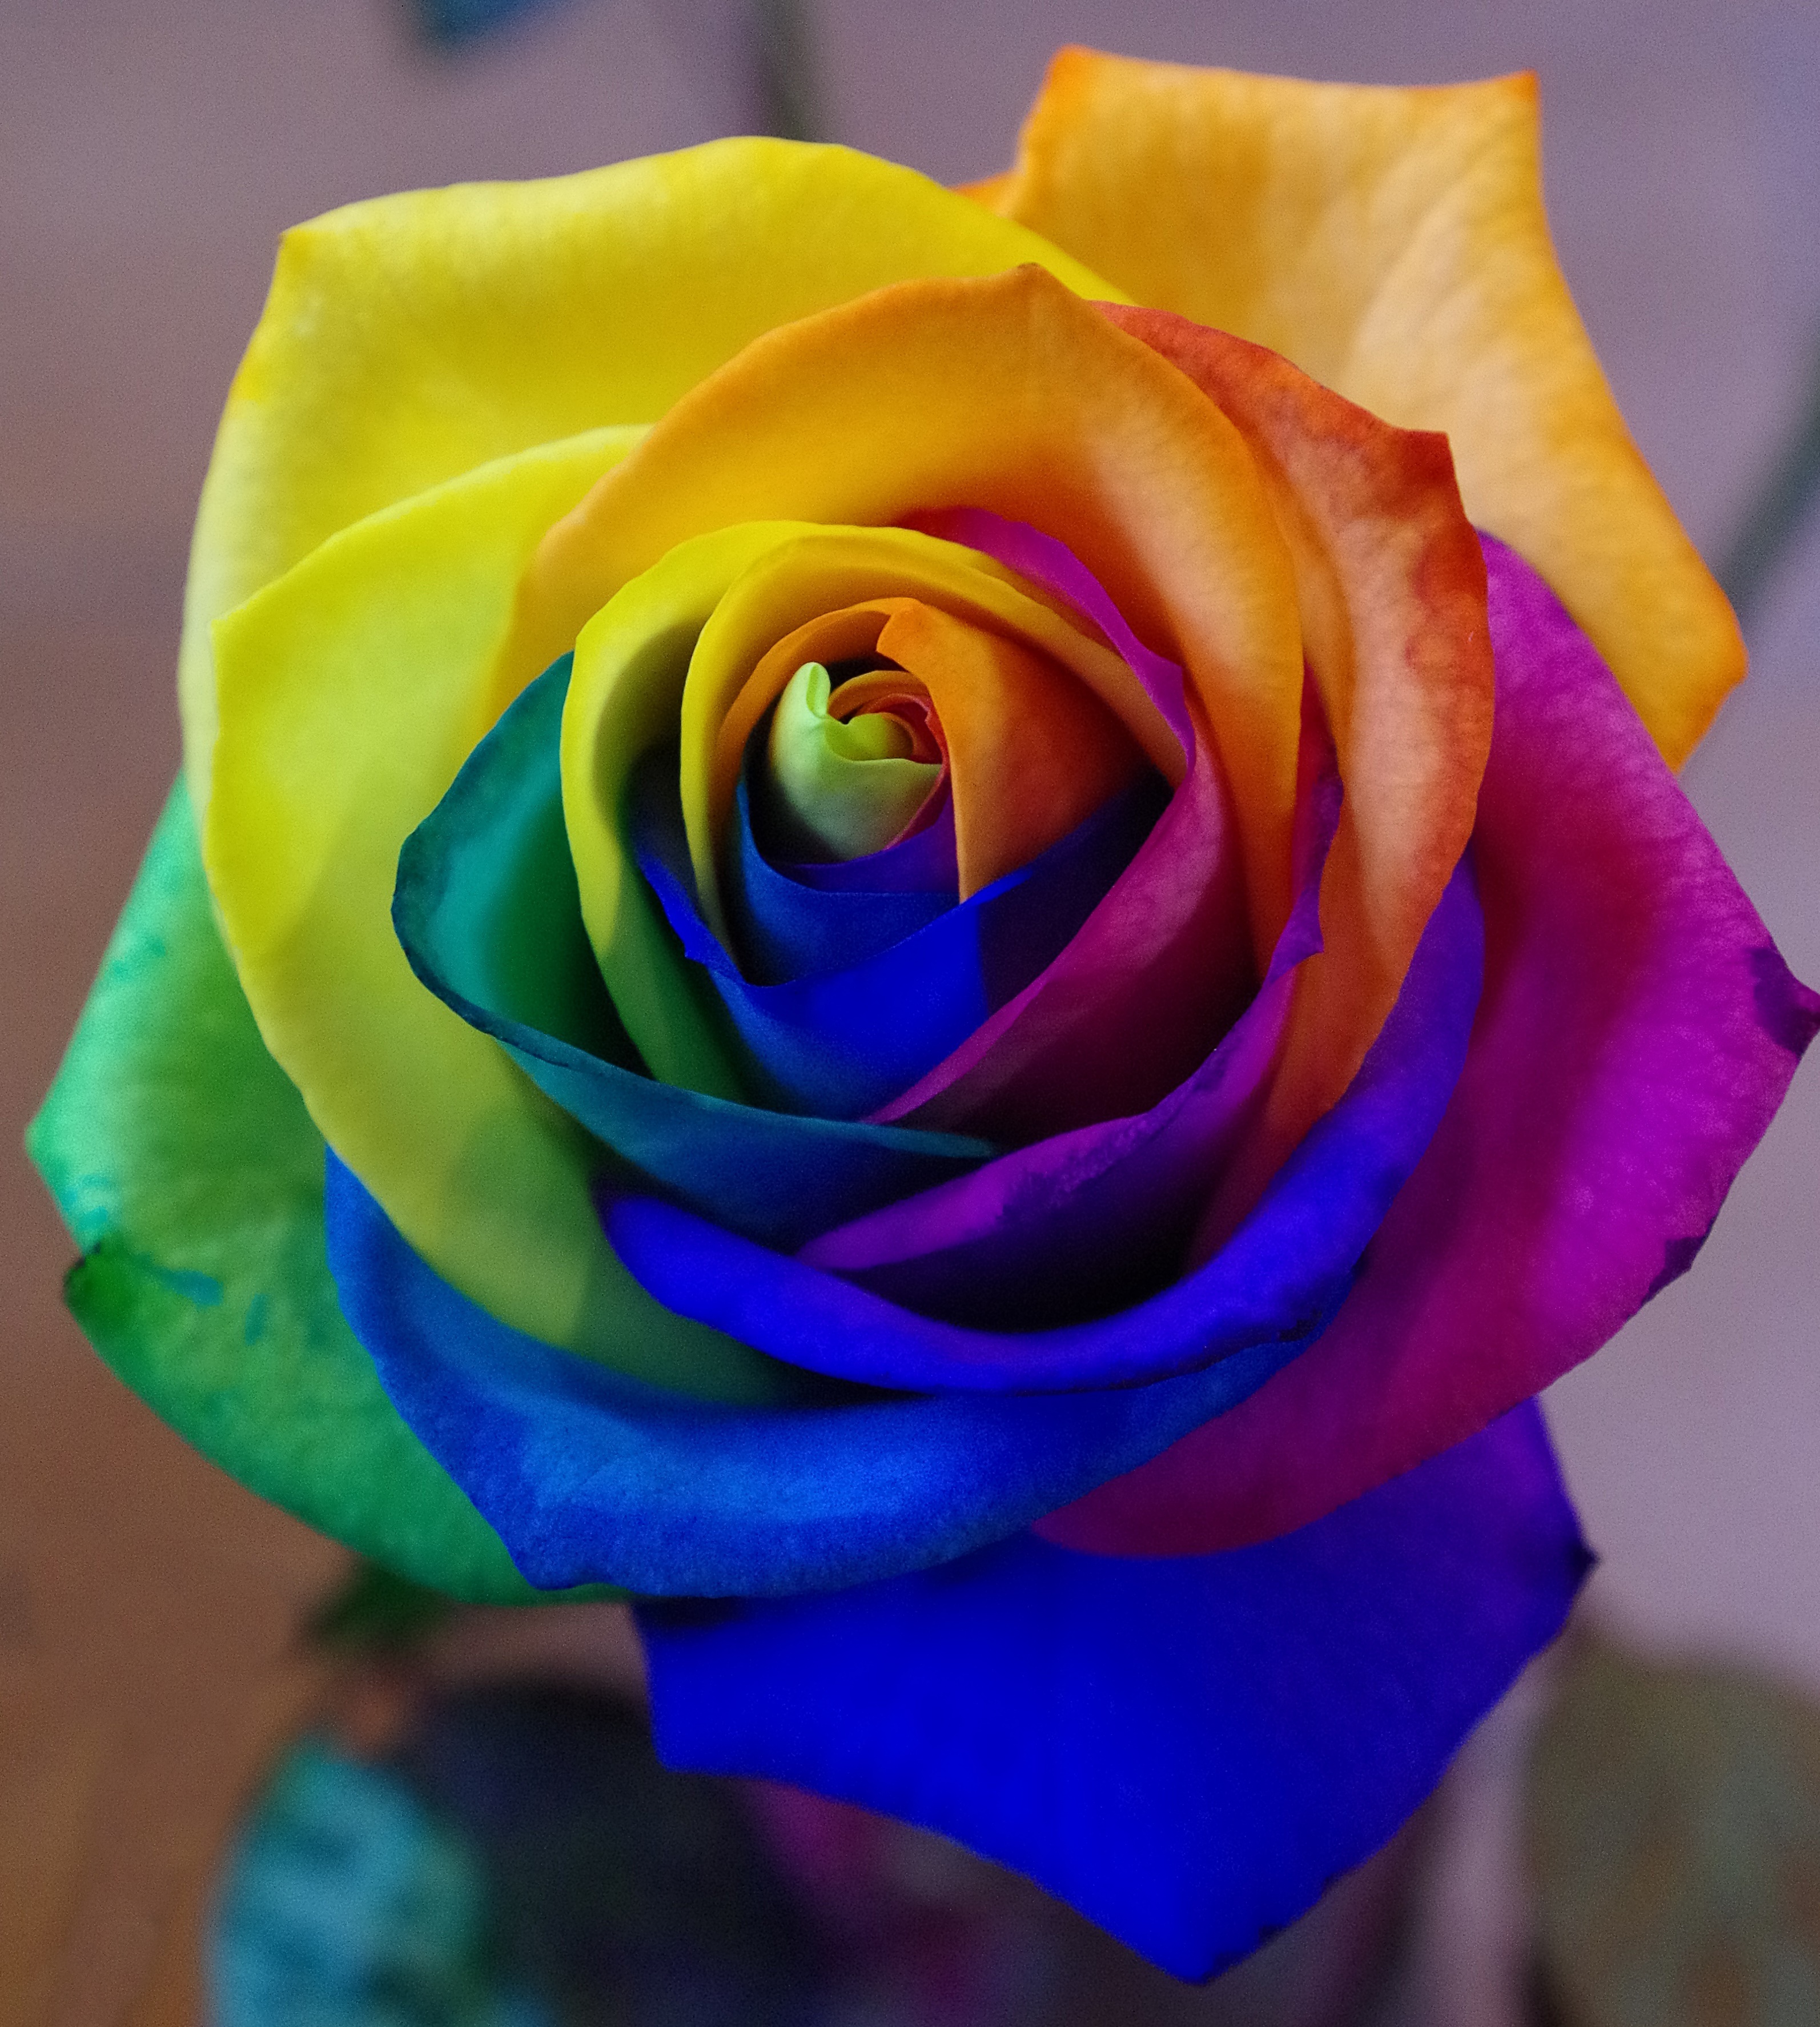 motley, flowers, rose flower, bud, rose, multicolored, iridescent, rainbow